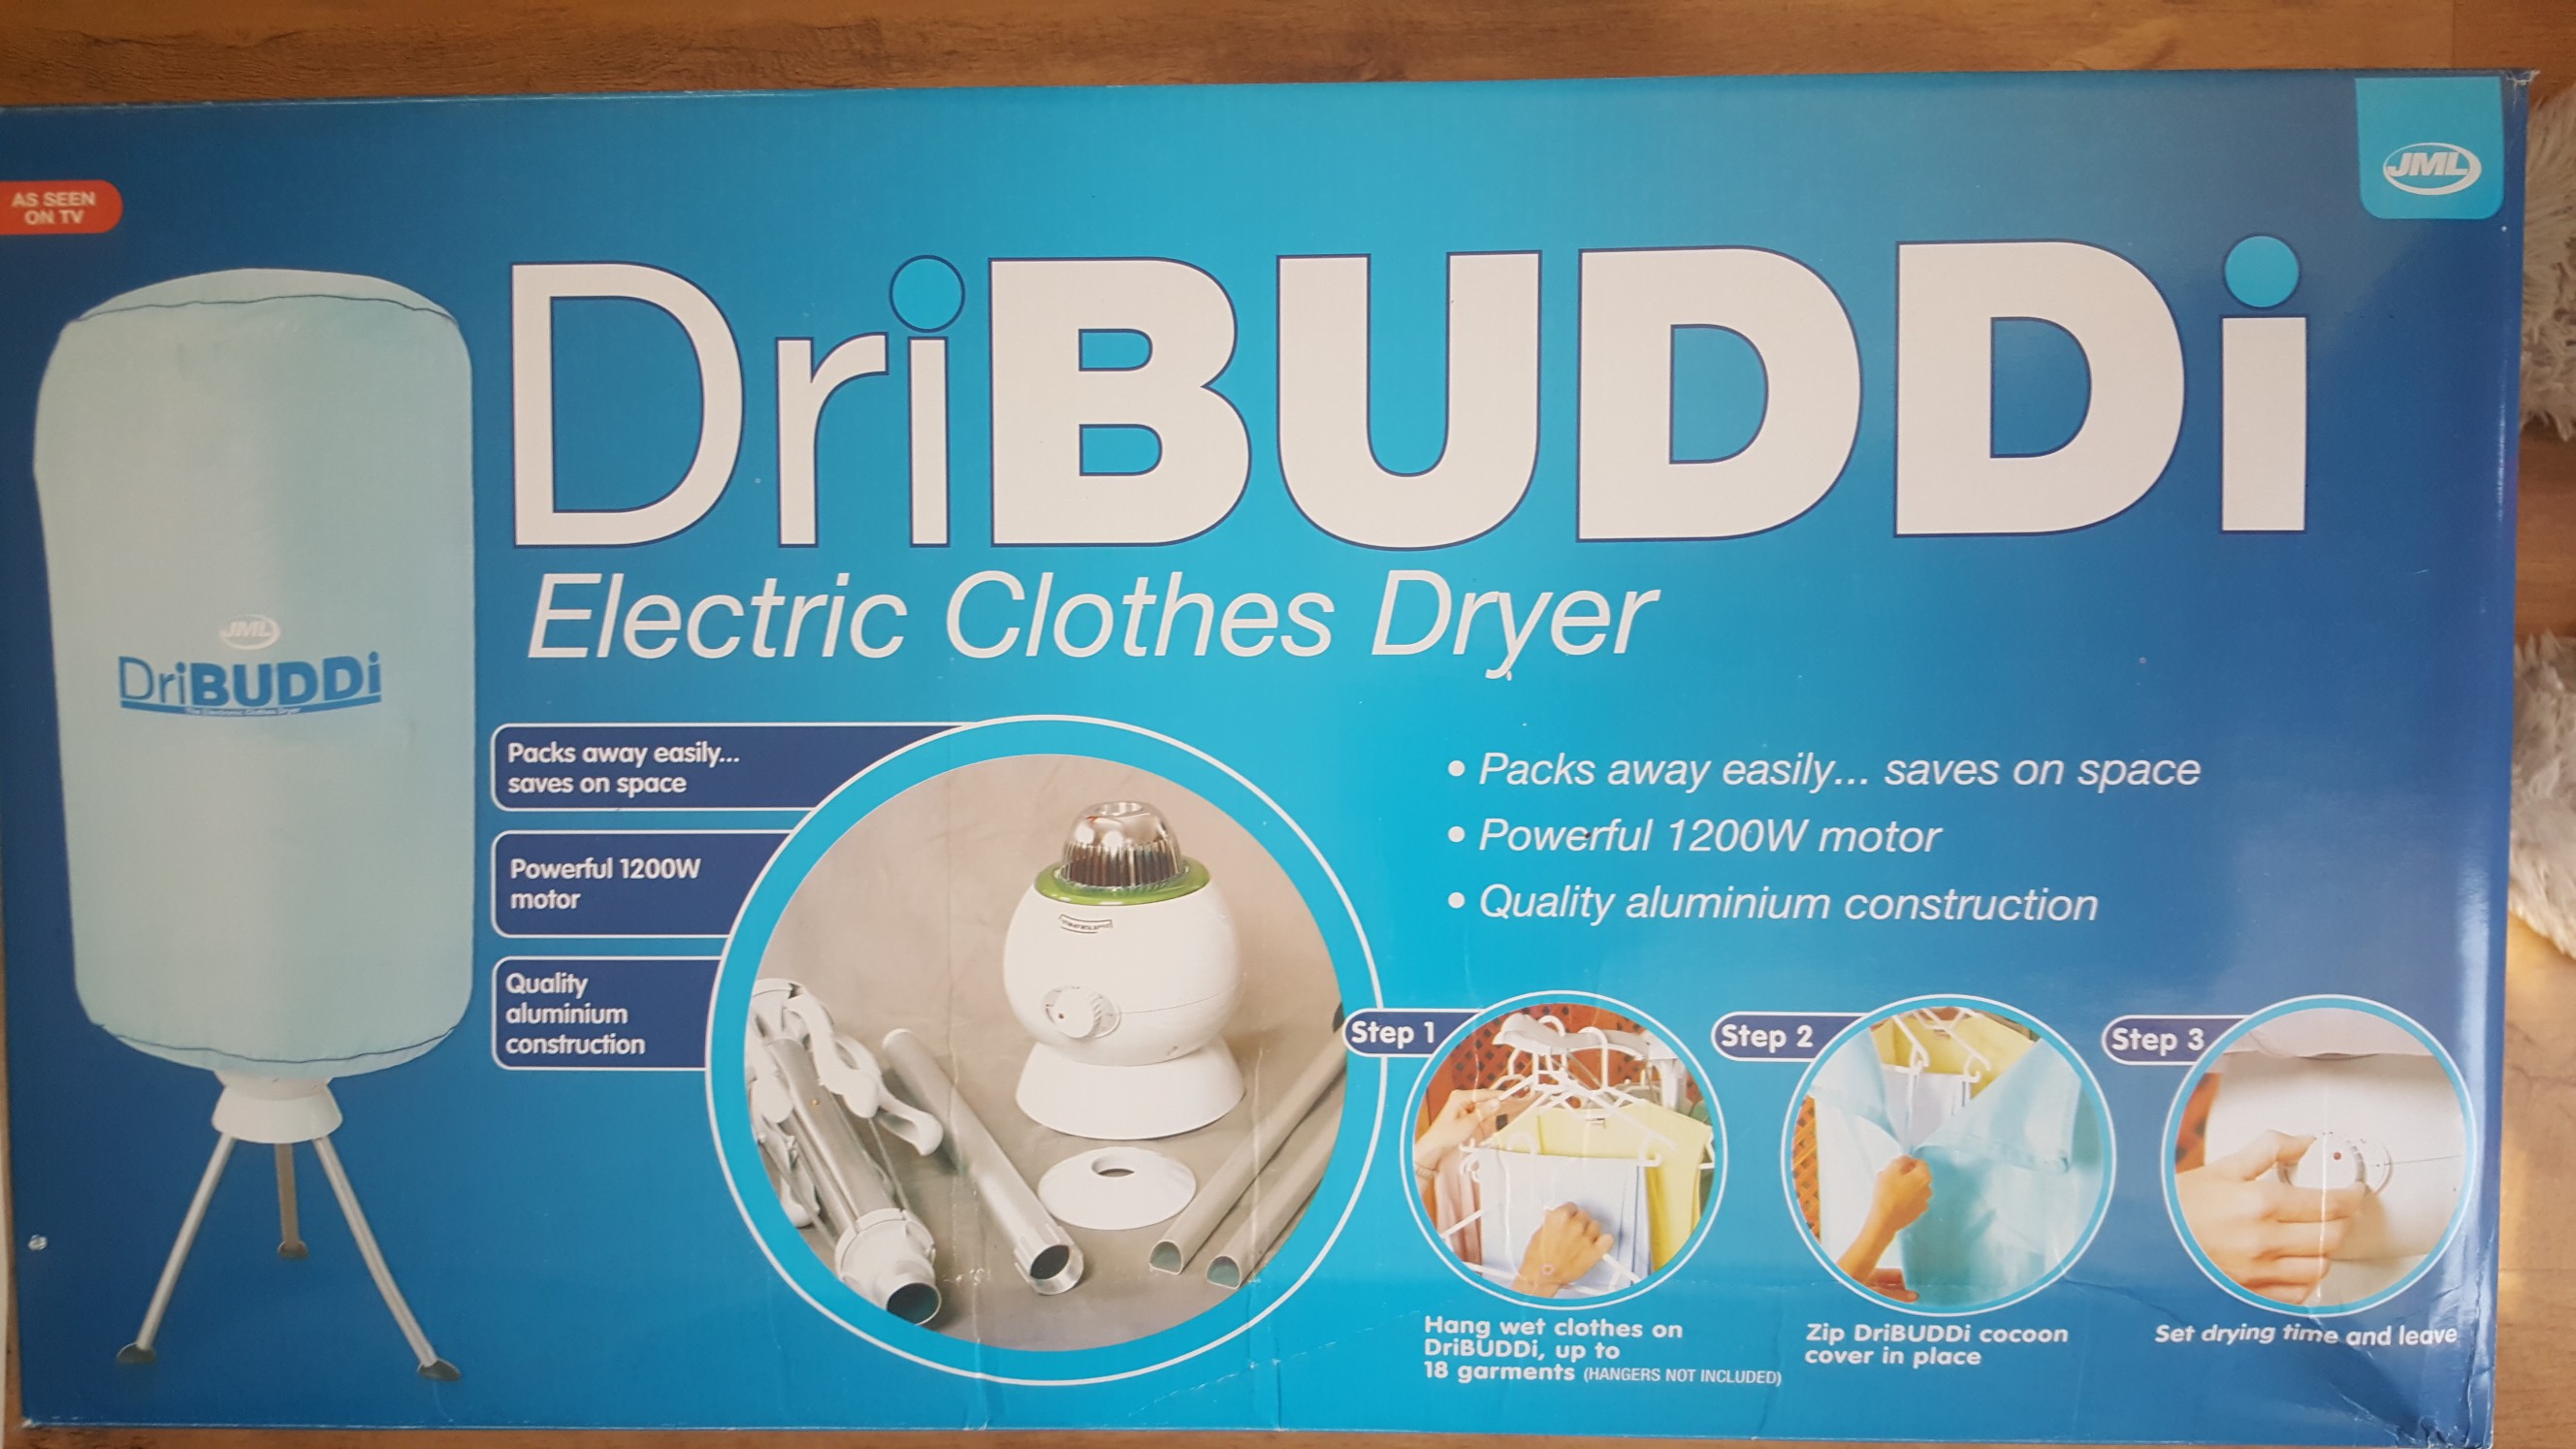 dri buddi electric clothes dryer